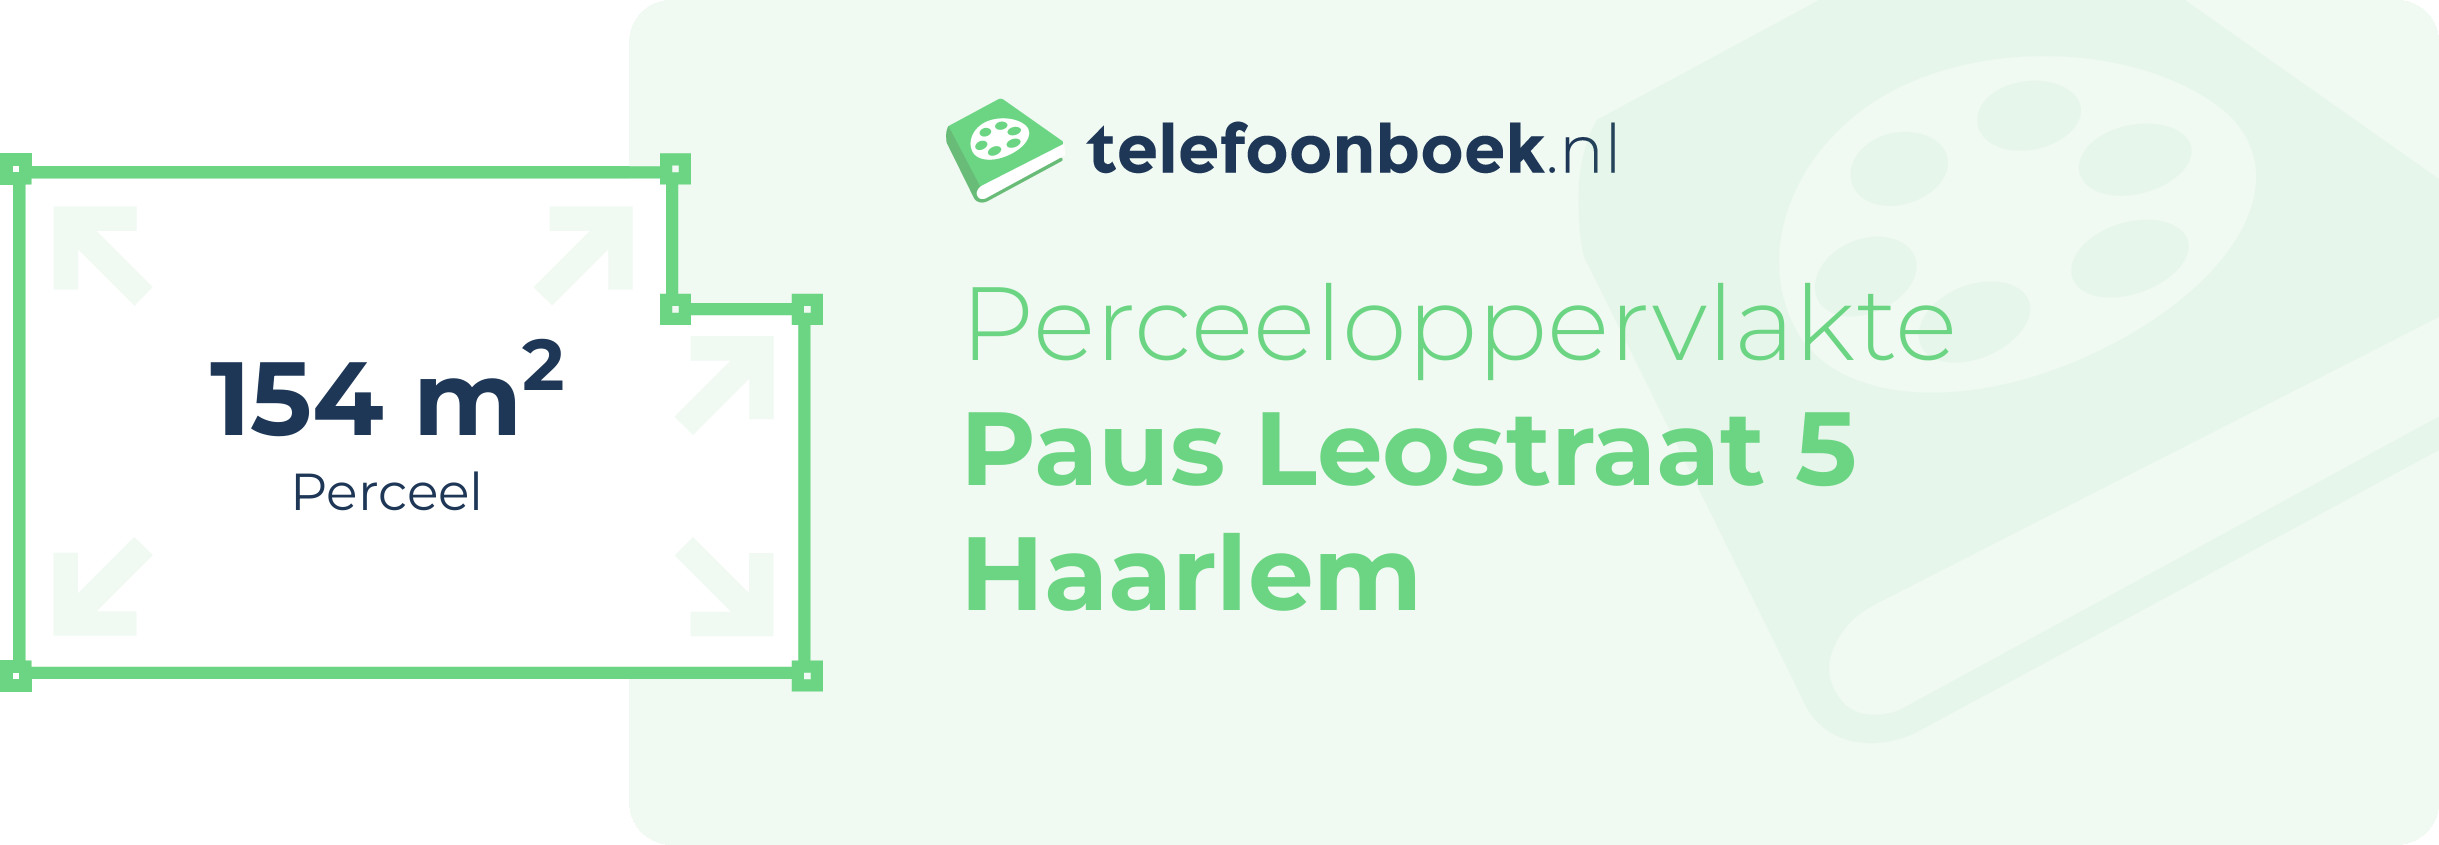 Perceeloppervlakte Paus Leostraat 5 Haarlem